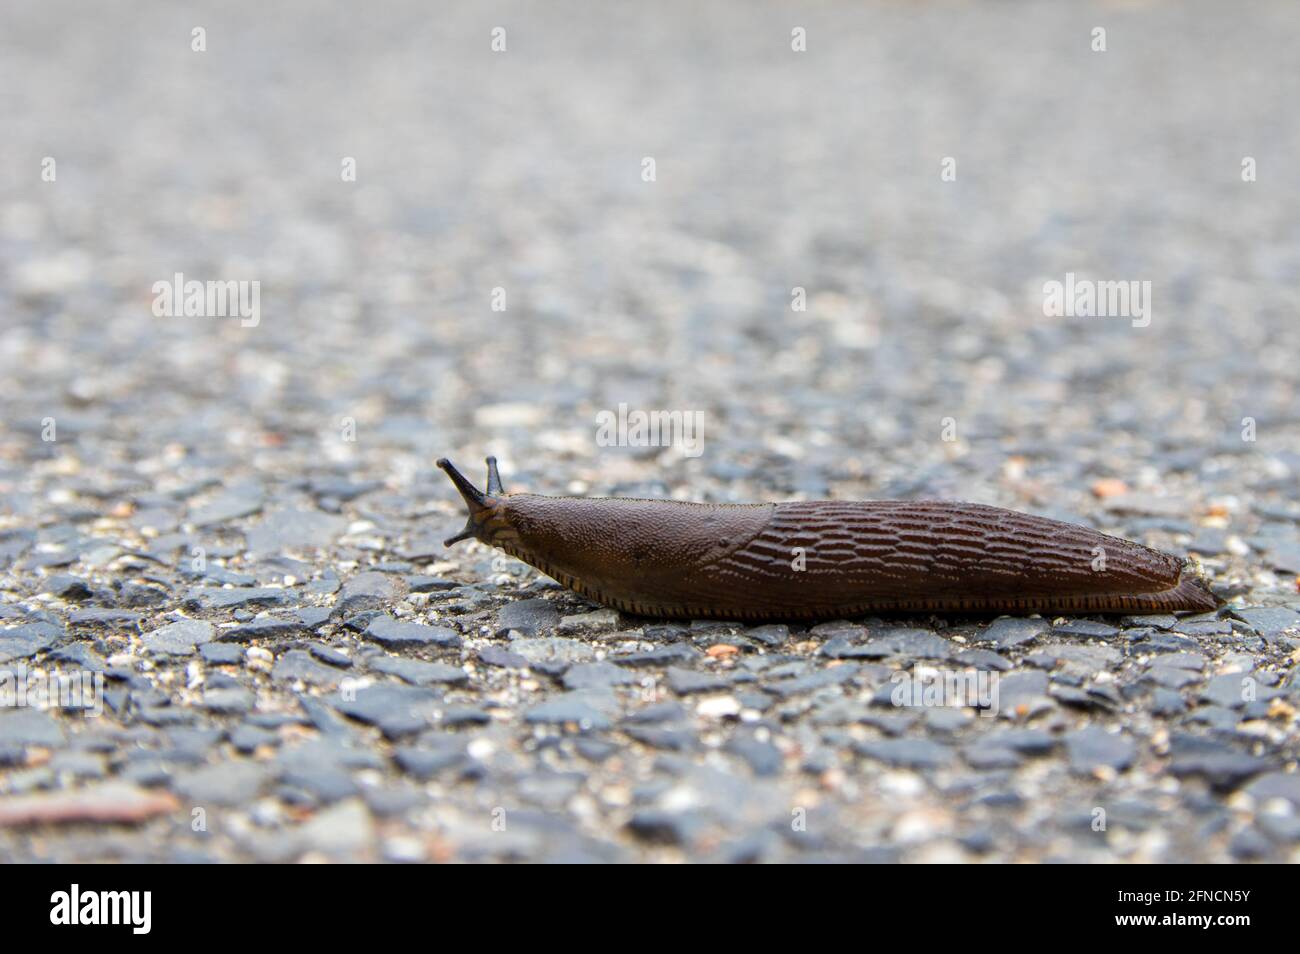 Spanish Slug (Arion vulgaris) on tarmac road. Selective Focus with shallow depth of field Stock Photo